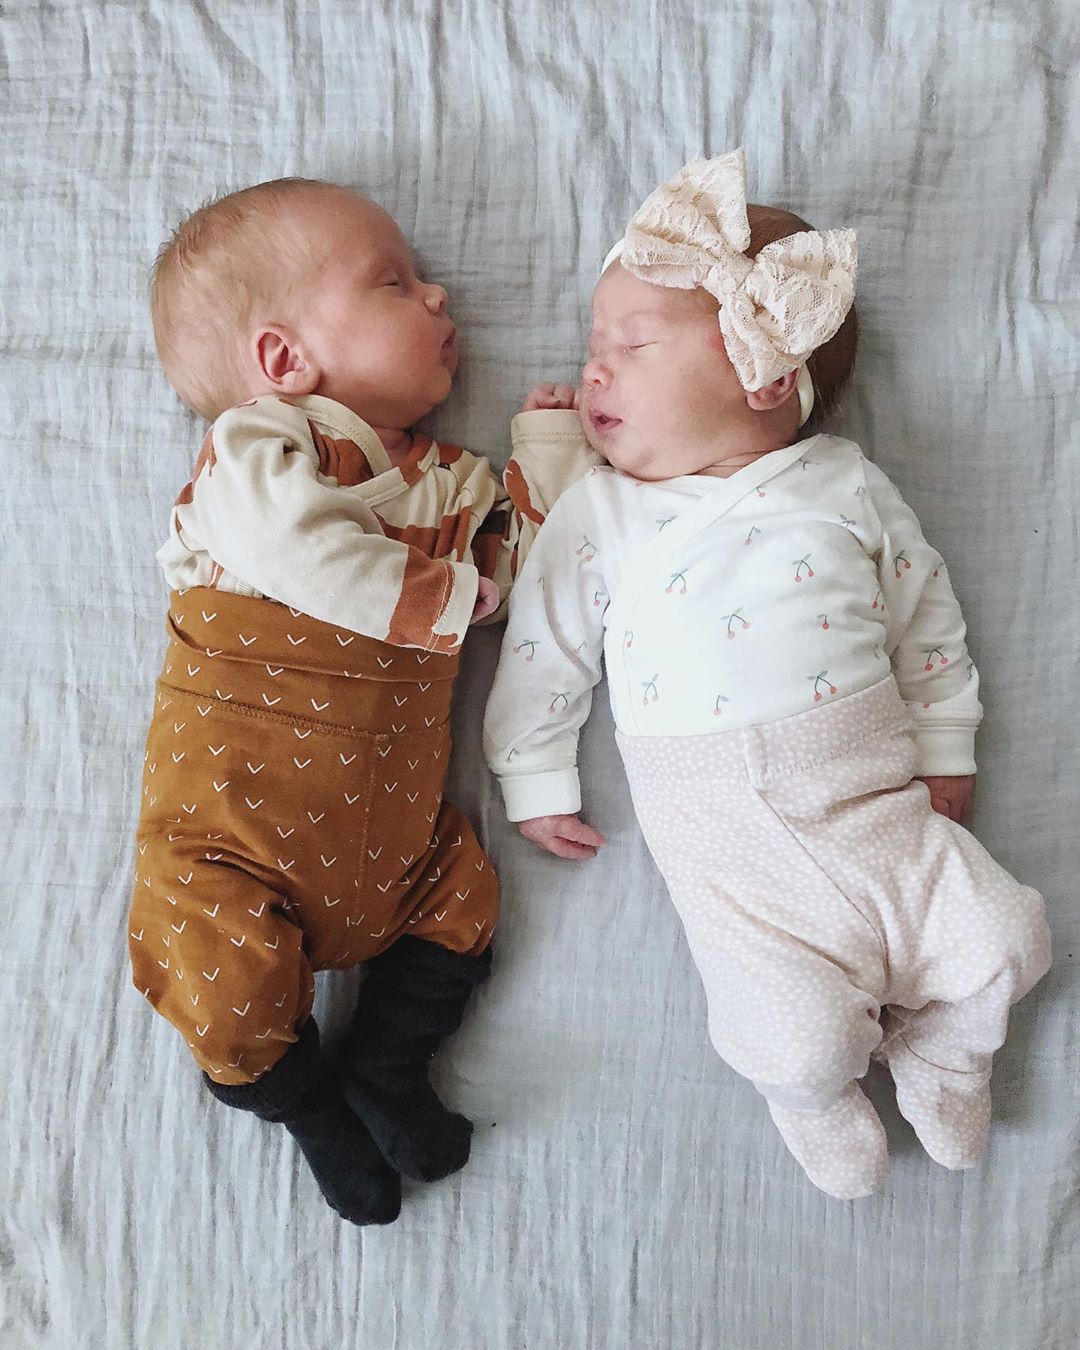 Boy and girl newborn twins. Photo by Instagram user @_heidiannika_